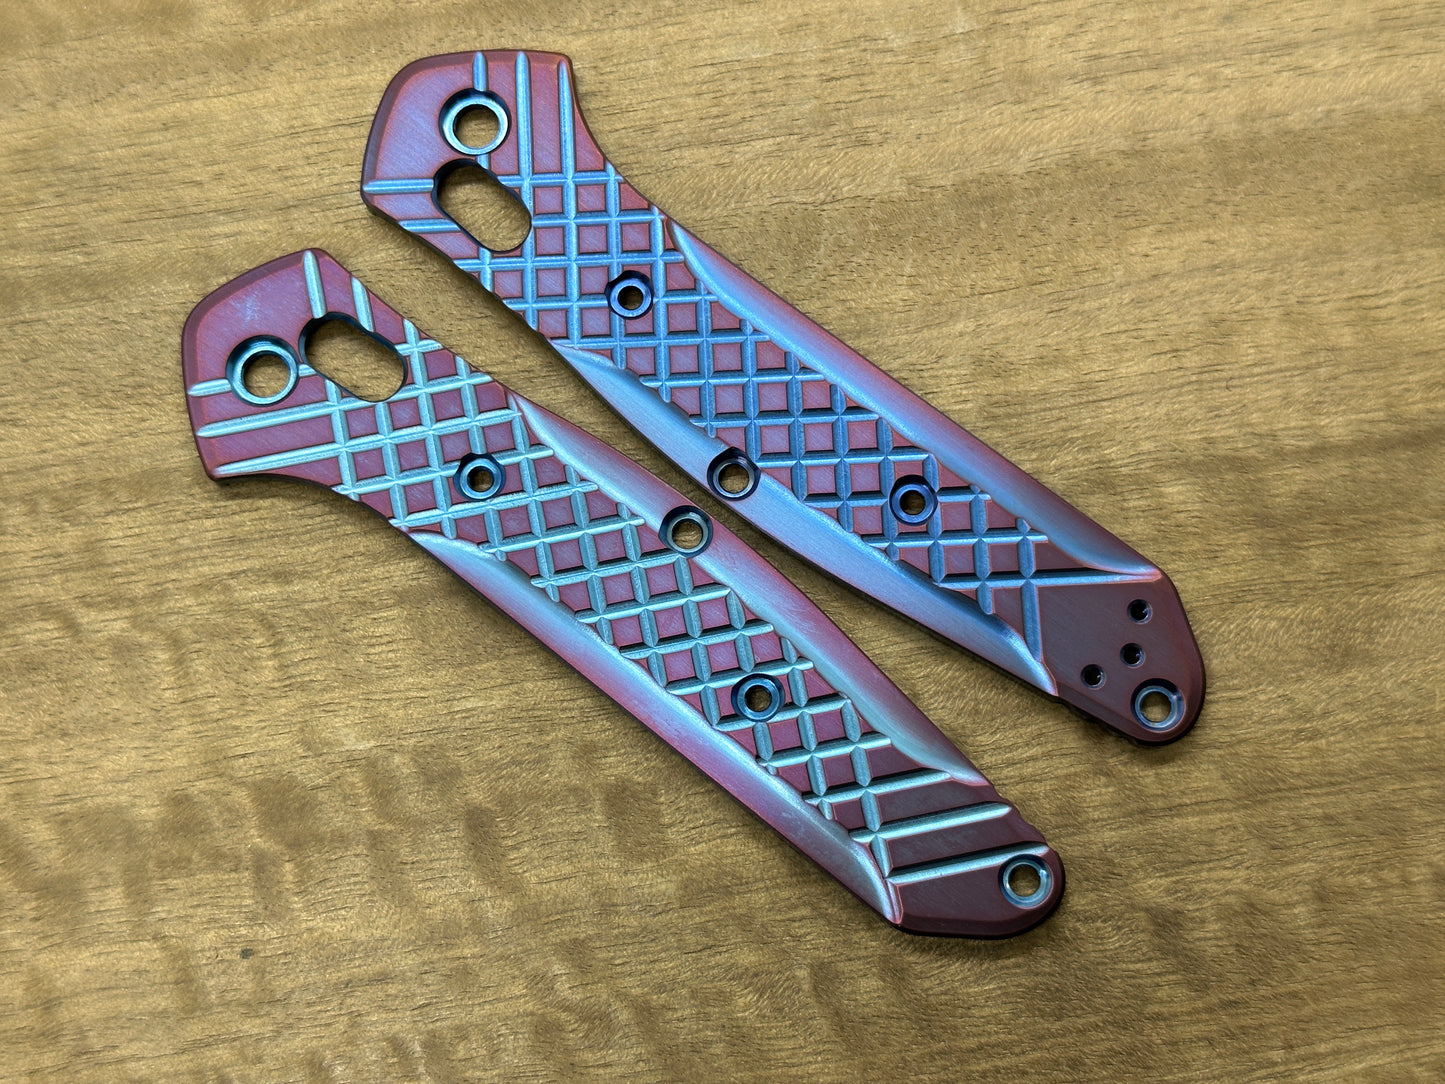 2 Tone (Blue-Purple) FRAG Cnc milled Titanium Scales for Benchmade 940 Osborne